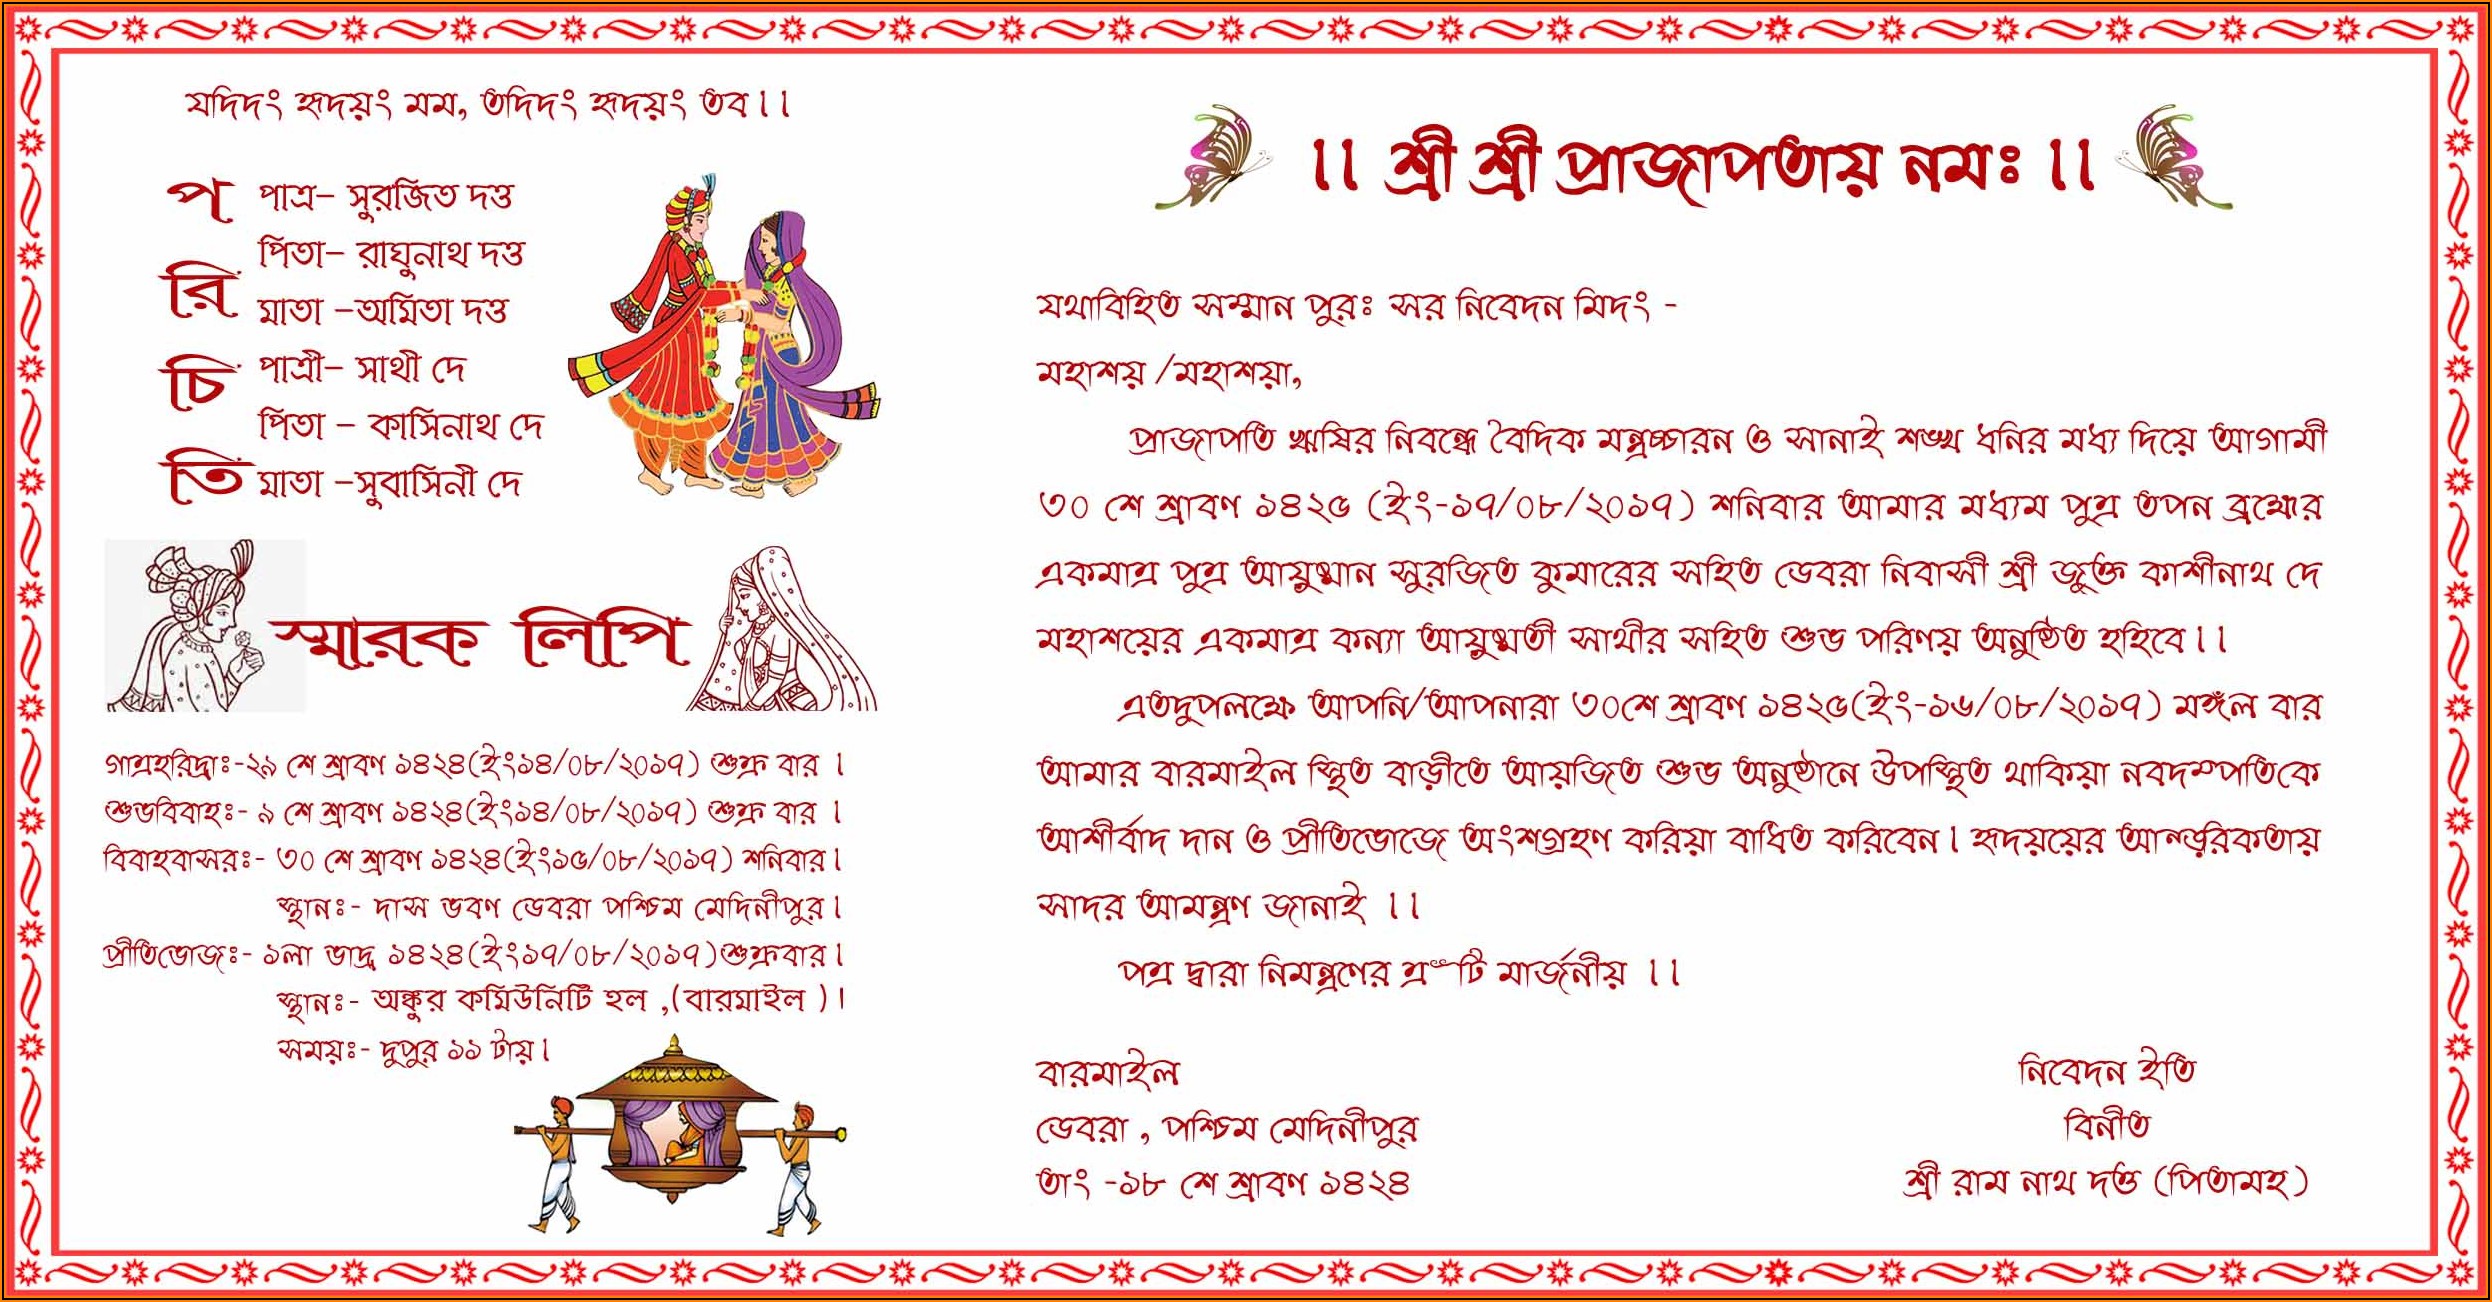 Hindu Marriage Invitation Card Format In Bengali